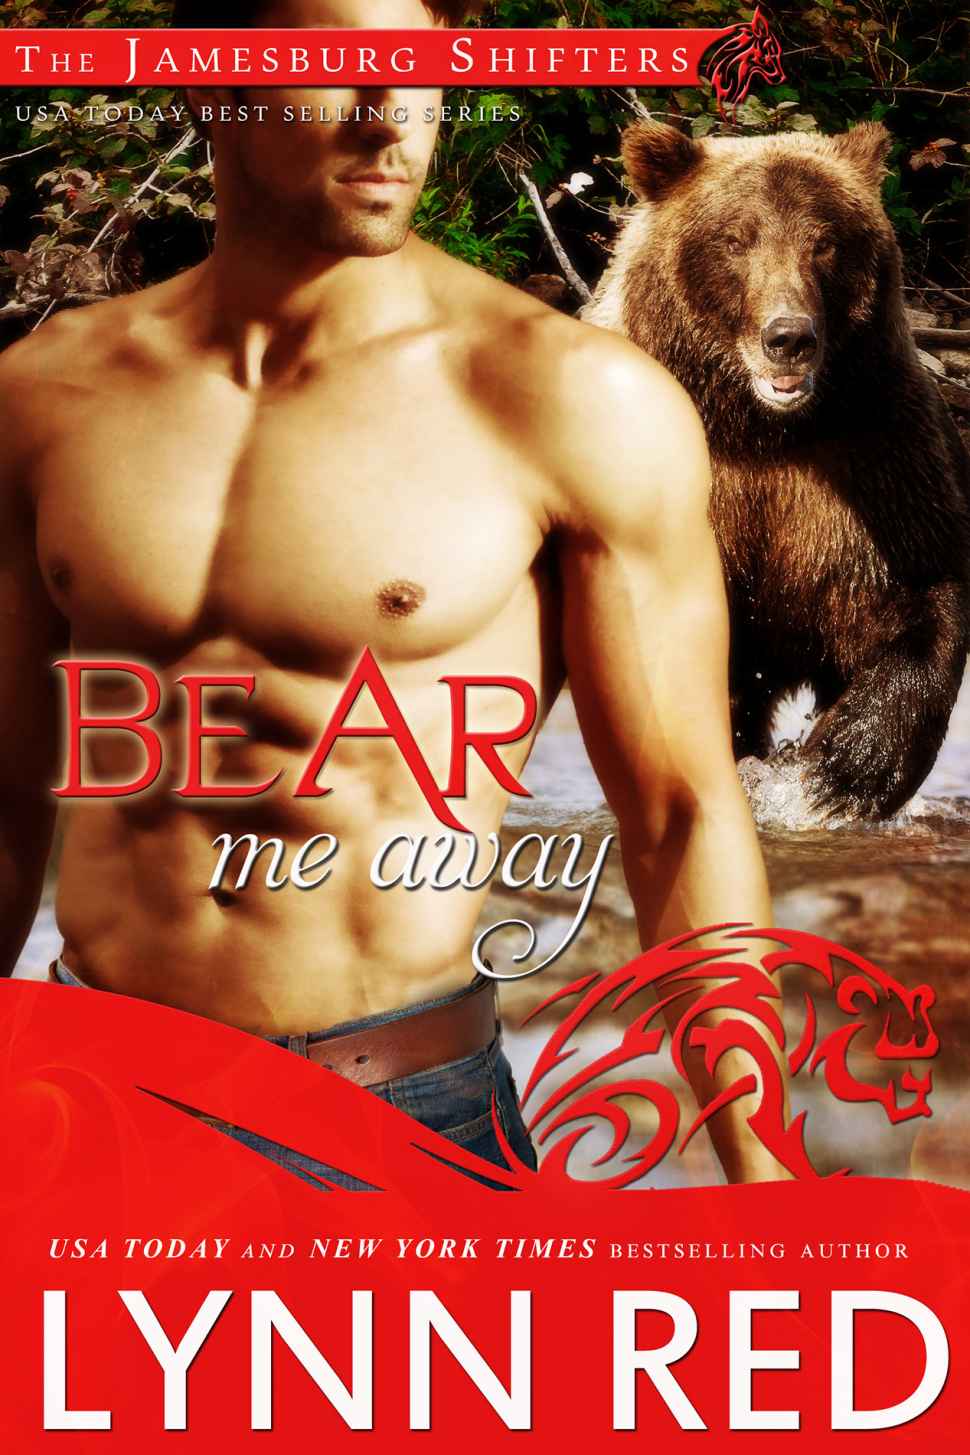 Bear Me Away (Alpha Werebear Paranormal Romance) (A Jamesburg Shifter Romance)